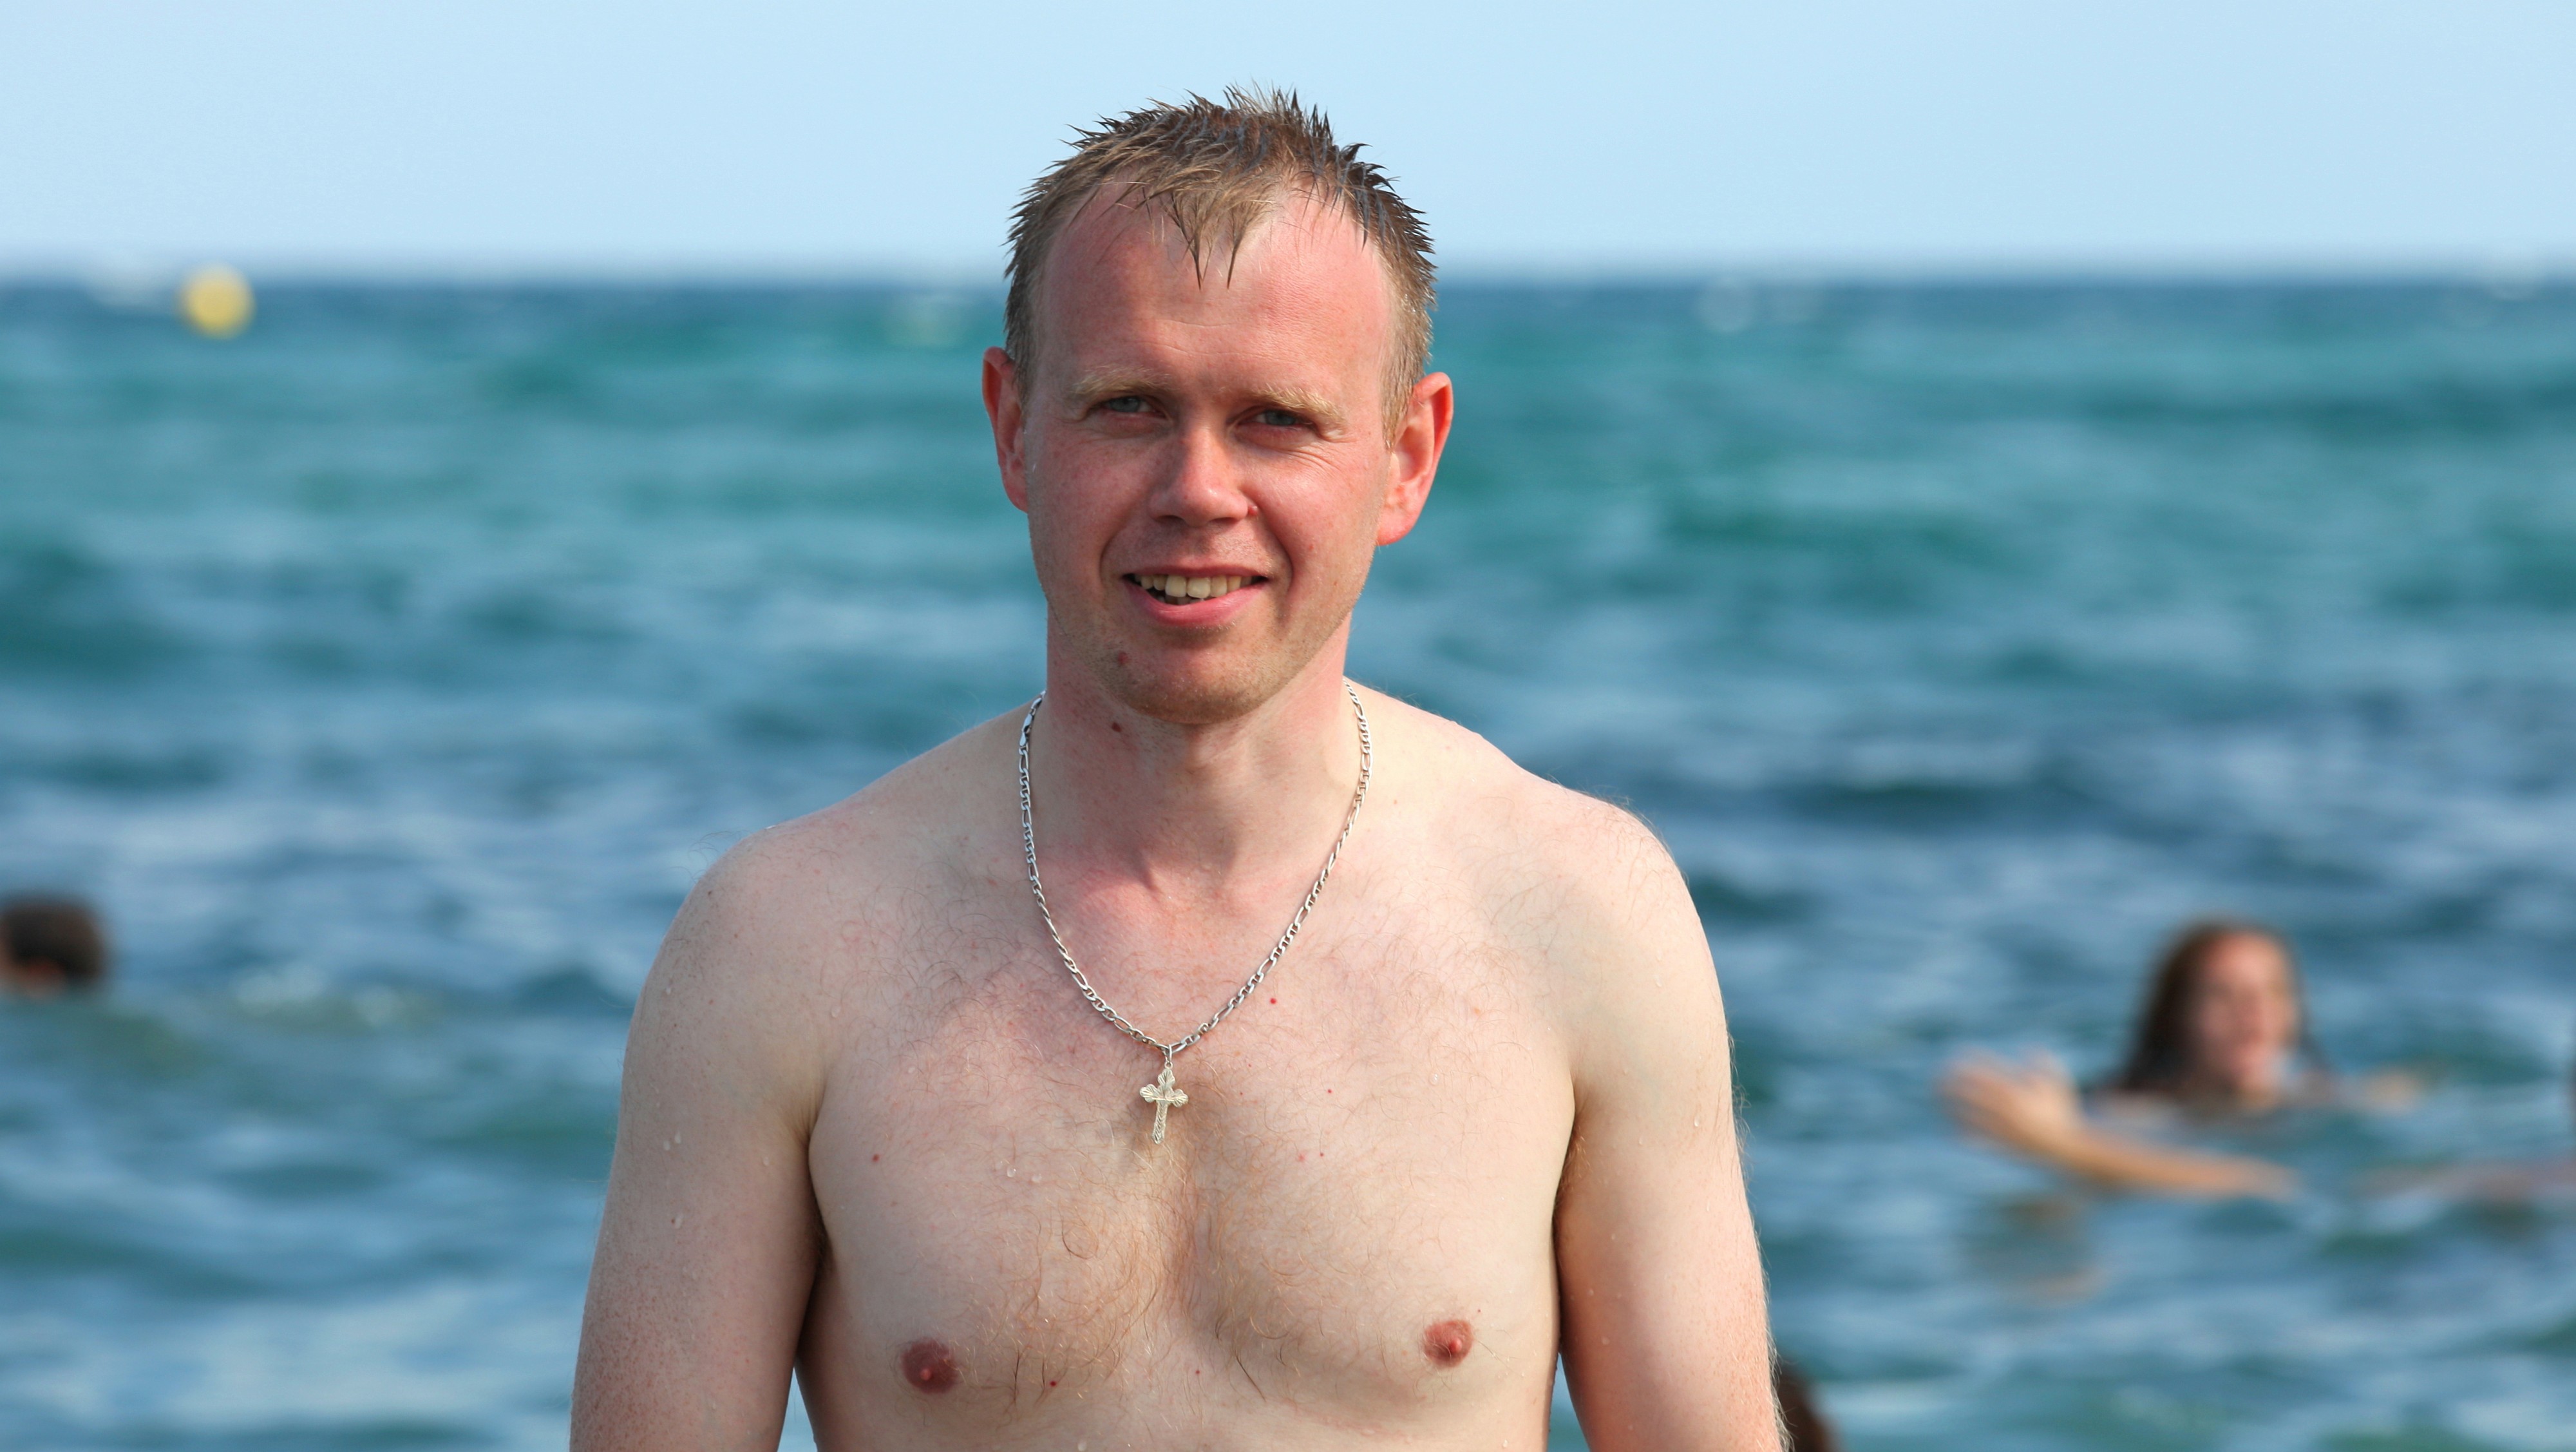 a man at a beach in Barcelona, Spain, August 2013